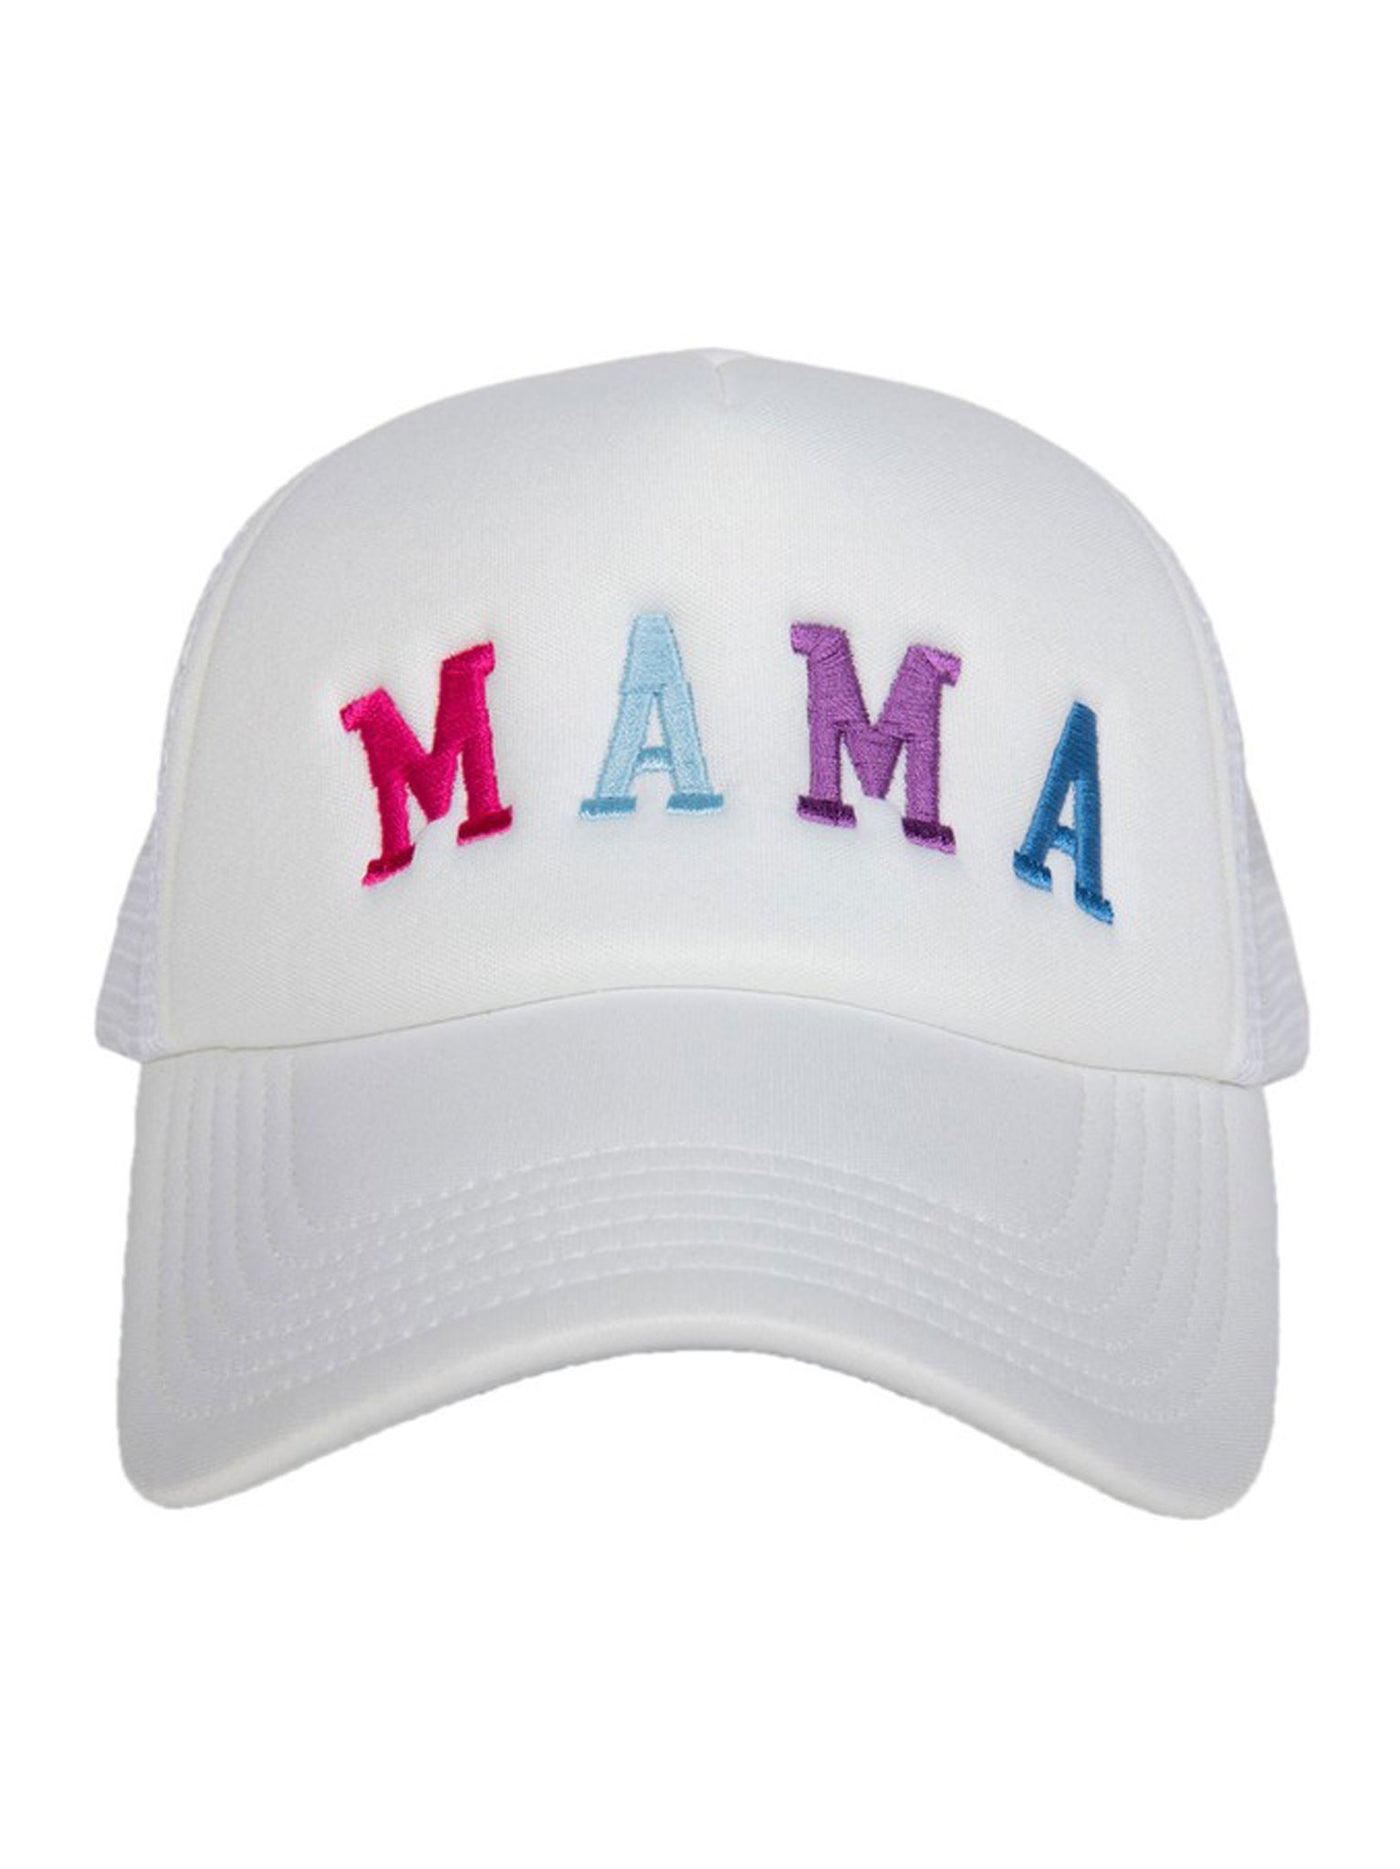 MAMA Multicolor Trucker Hat